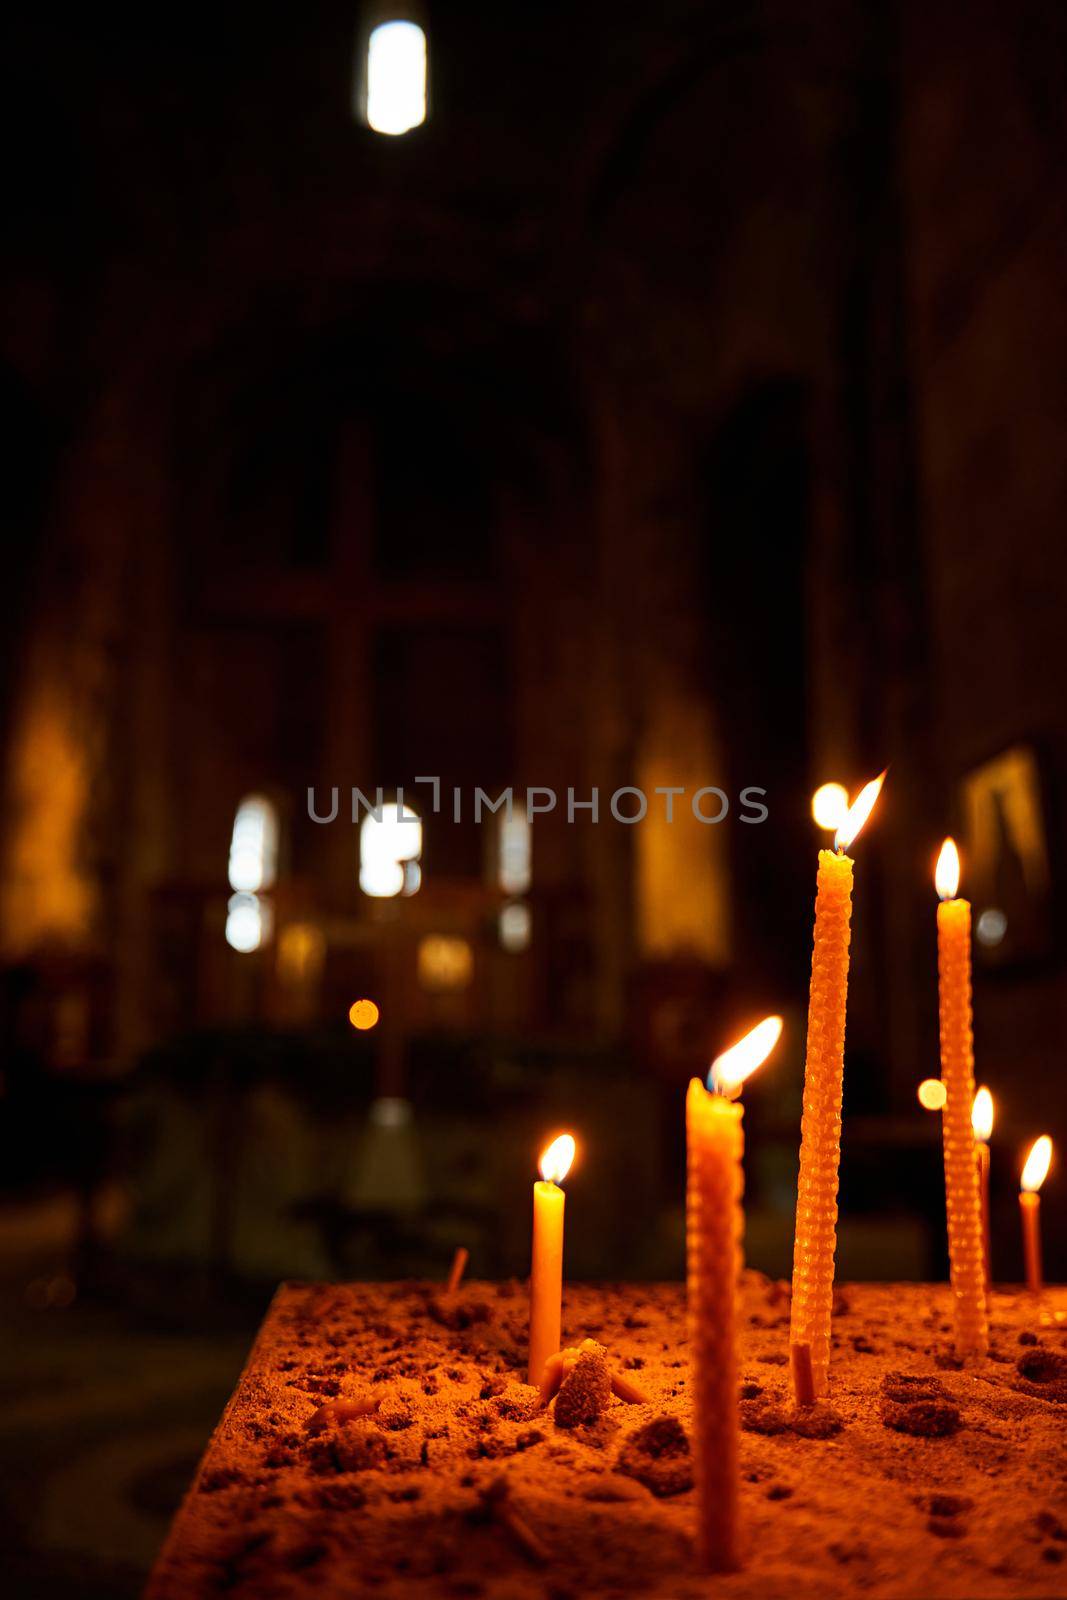 Burning candles in a church on a dark background. Memorial Candles. Burning Candles In The Temple, Sacred Fire. Candles Burning in Dark Church.